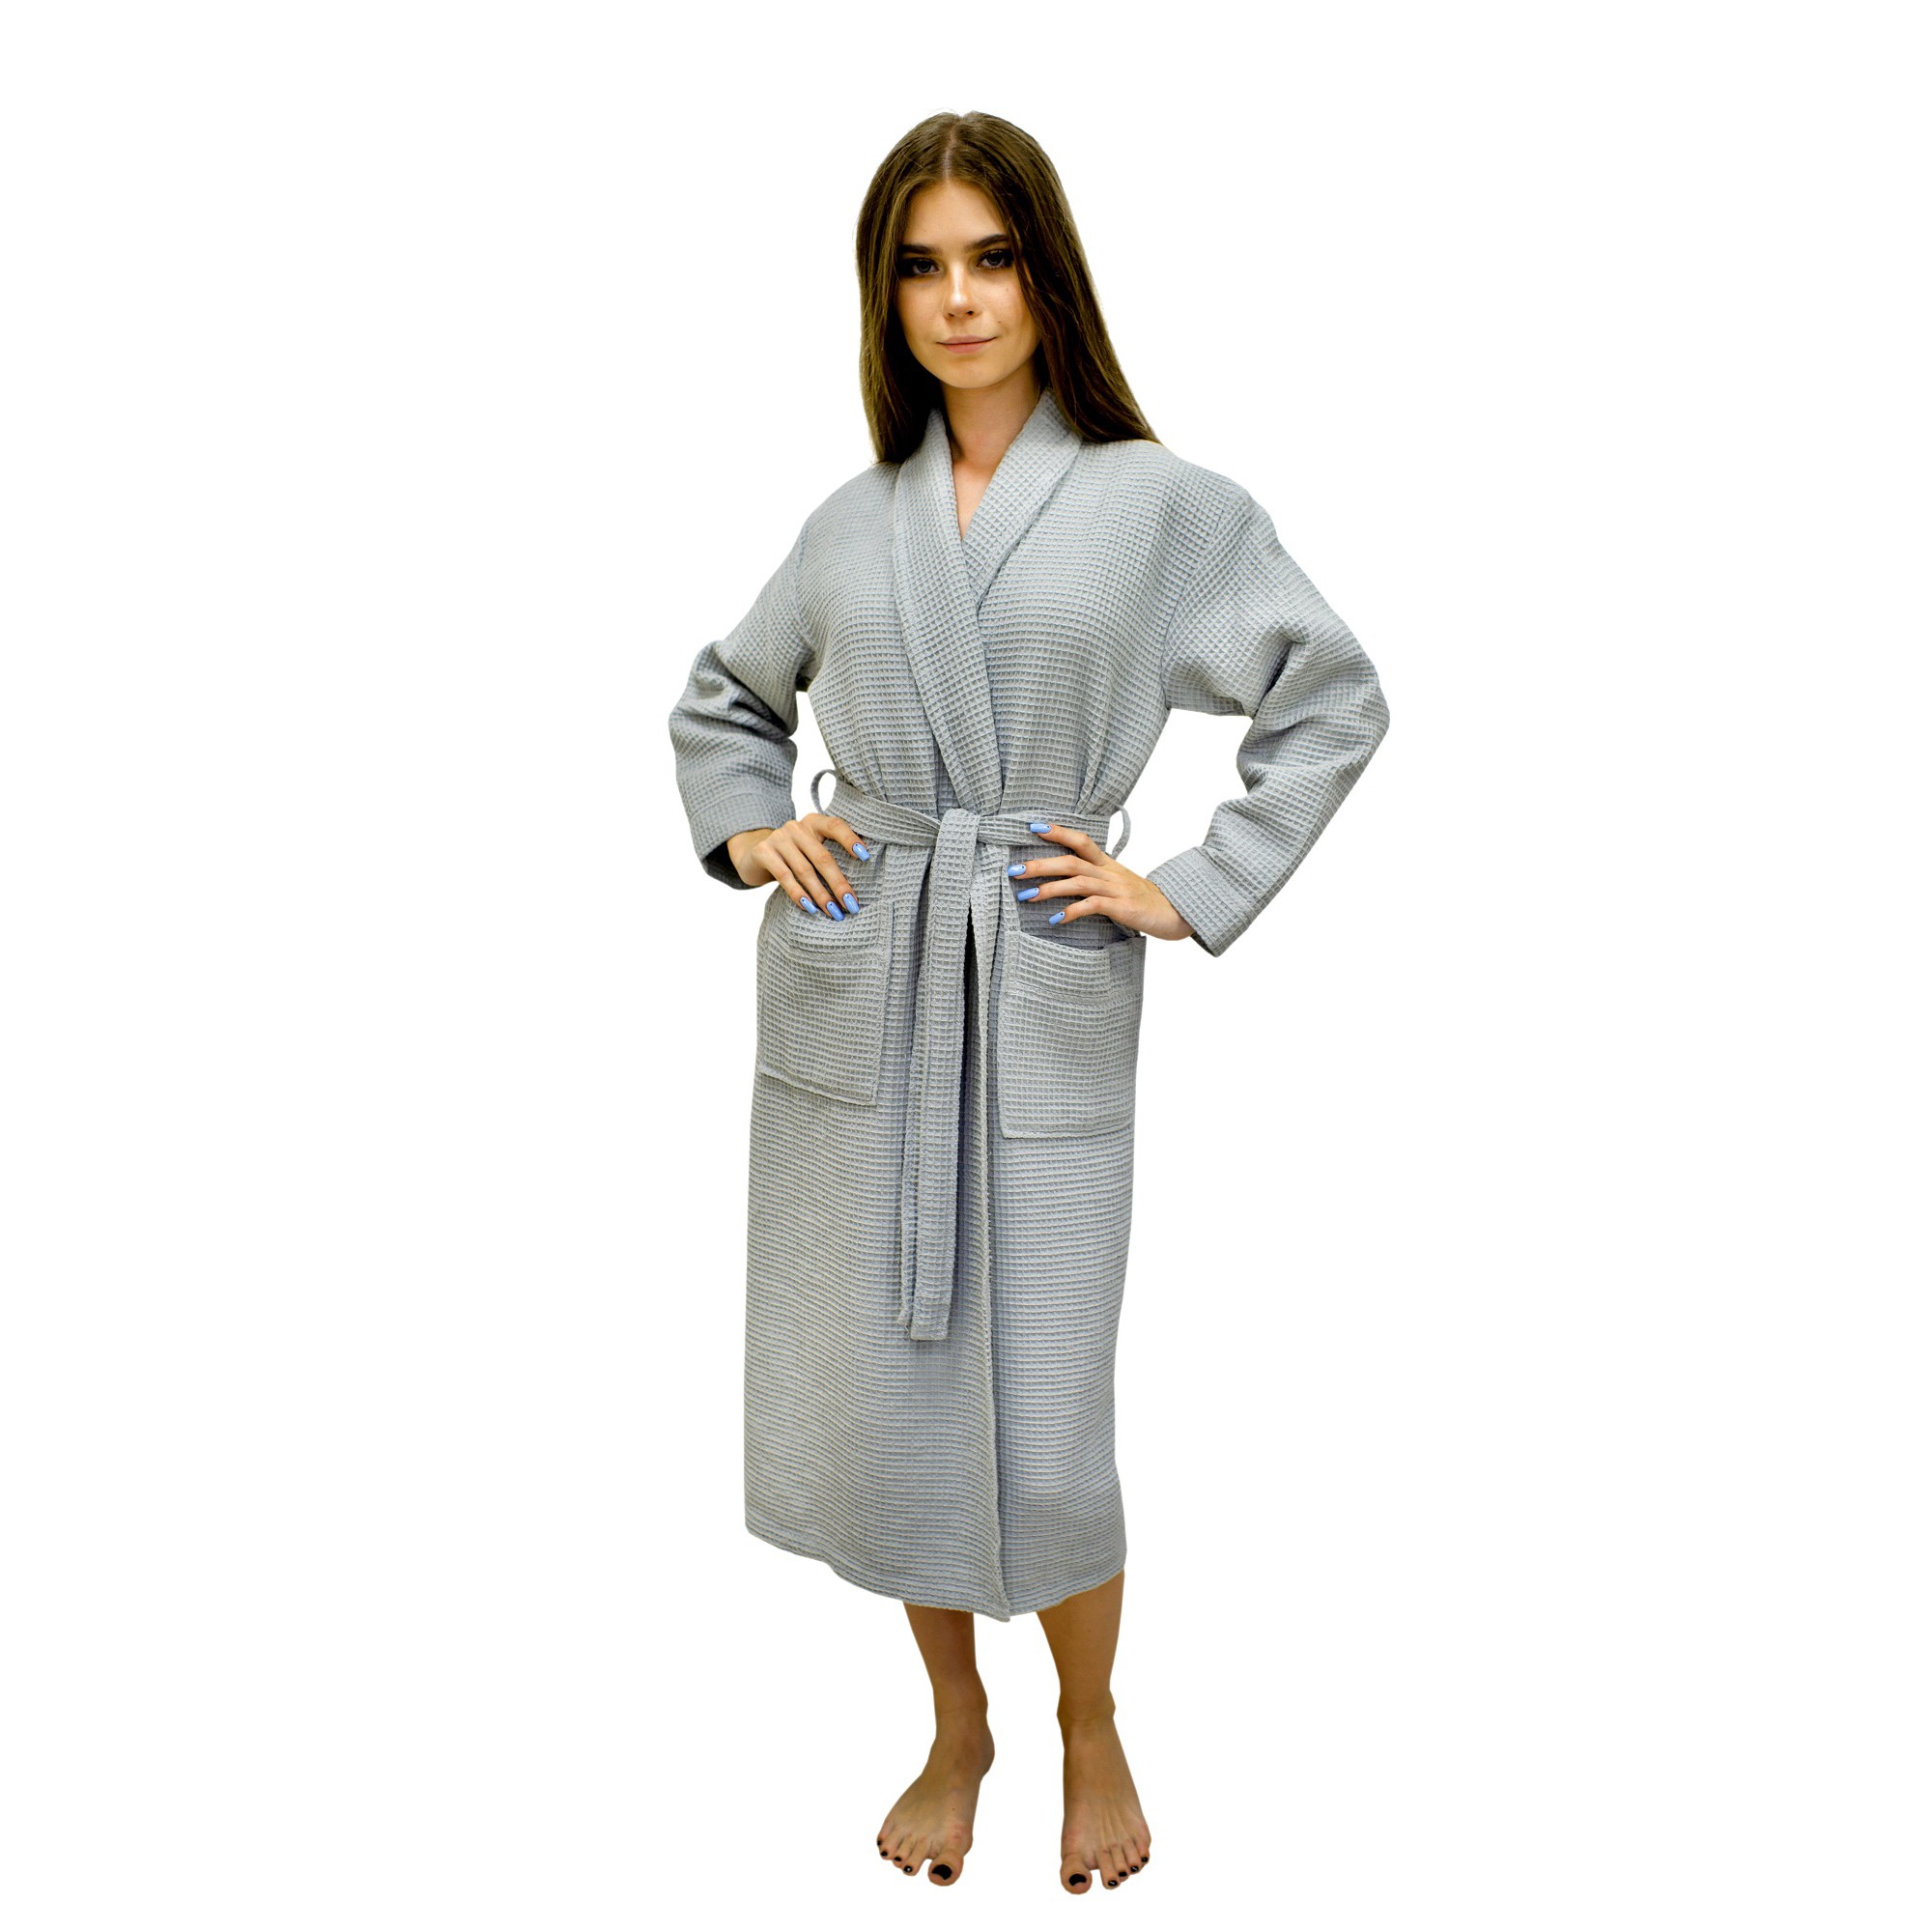 Банный халат Блюми цвет: серый (L), размер L nus905911 Банный халат Блюми цвет: серый (L) - фото 1